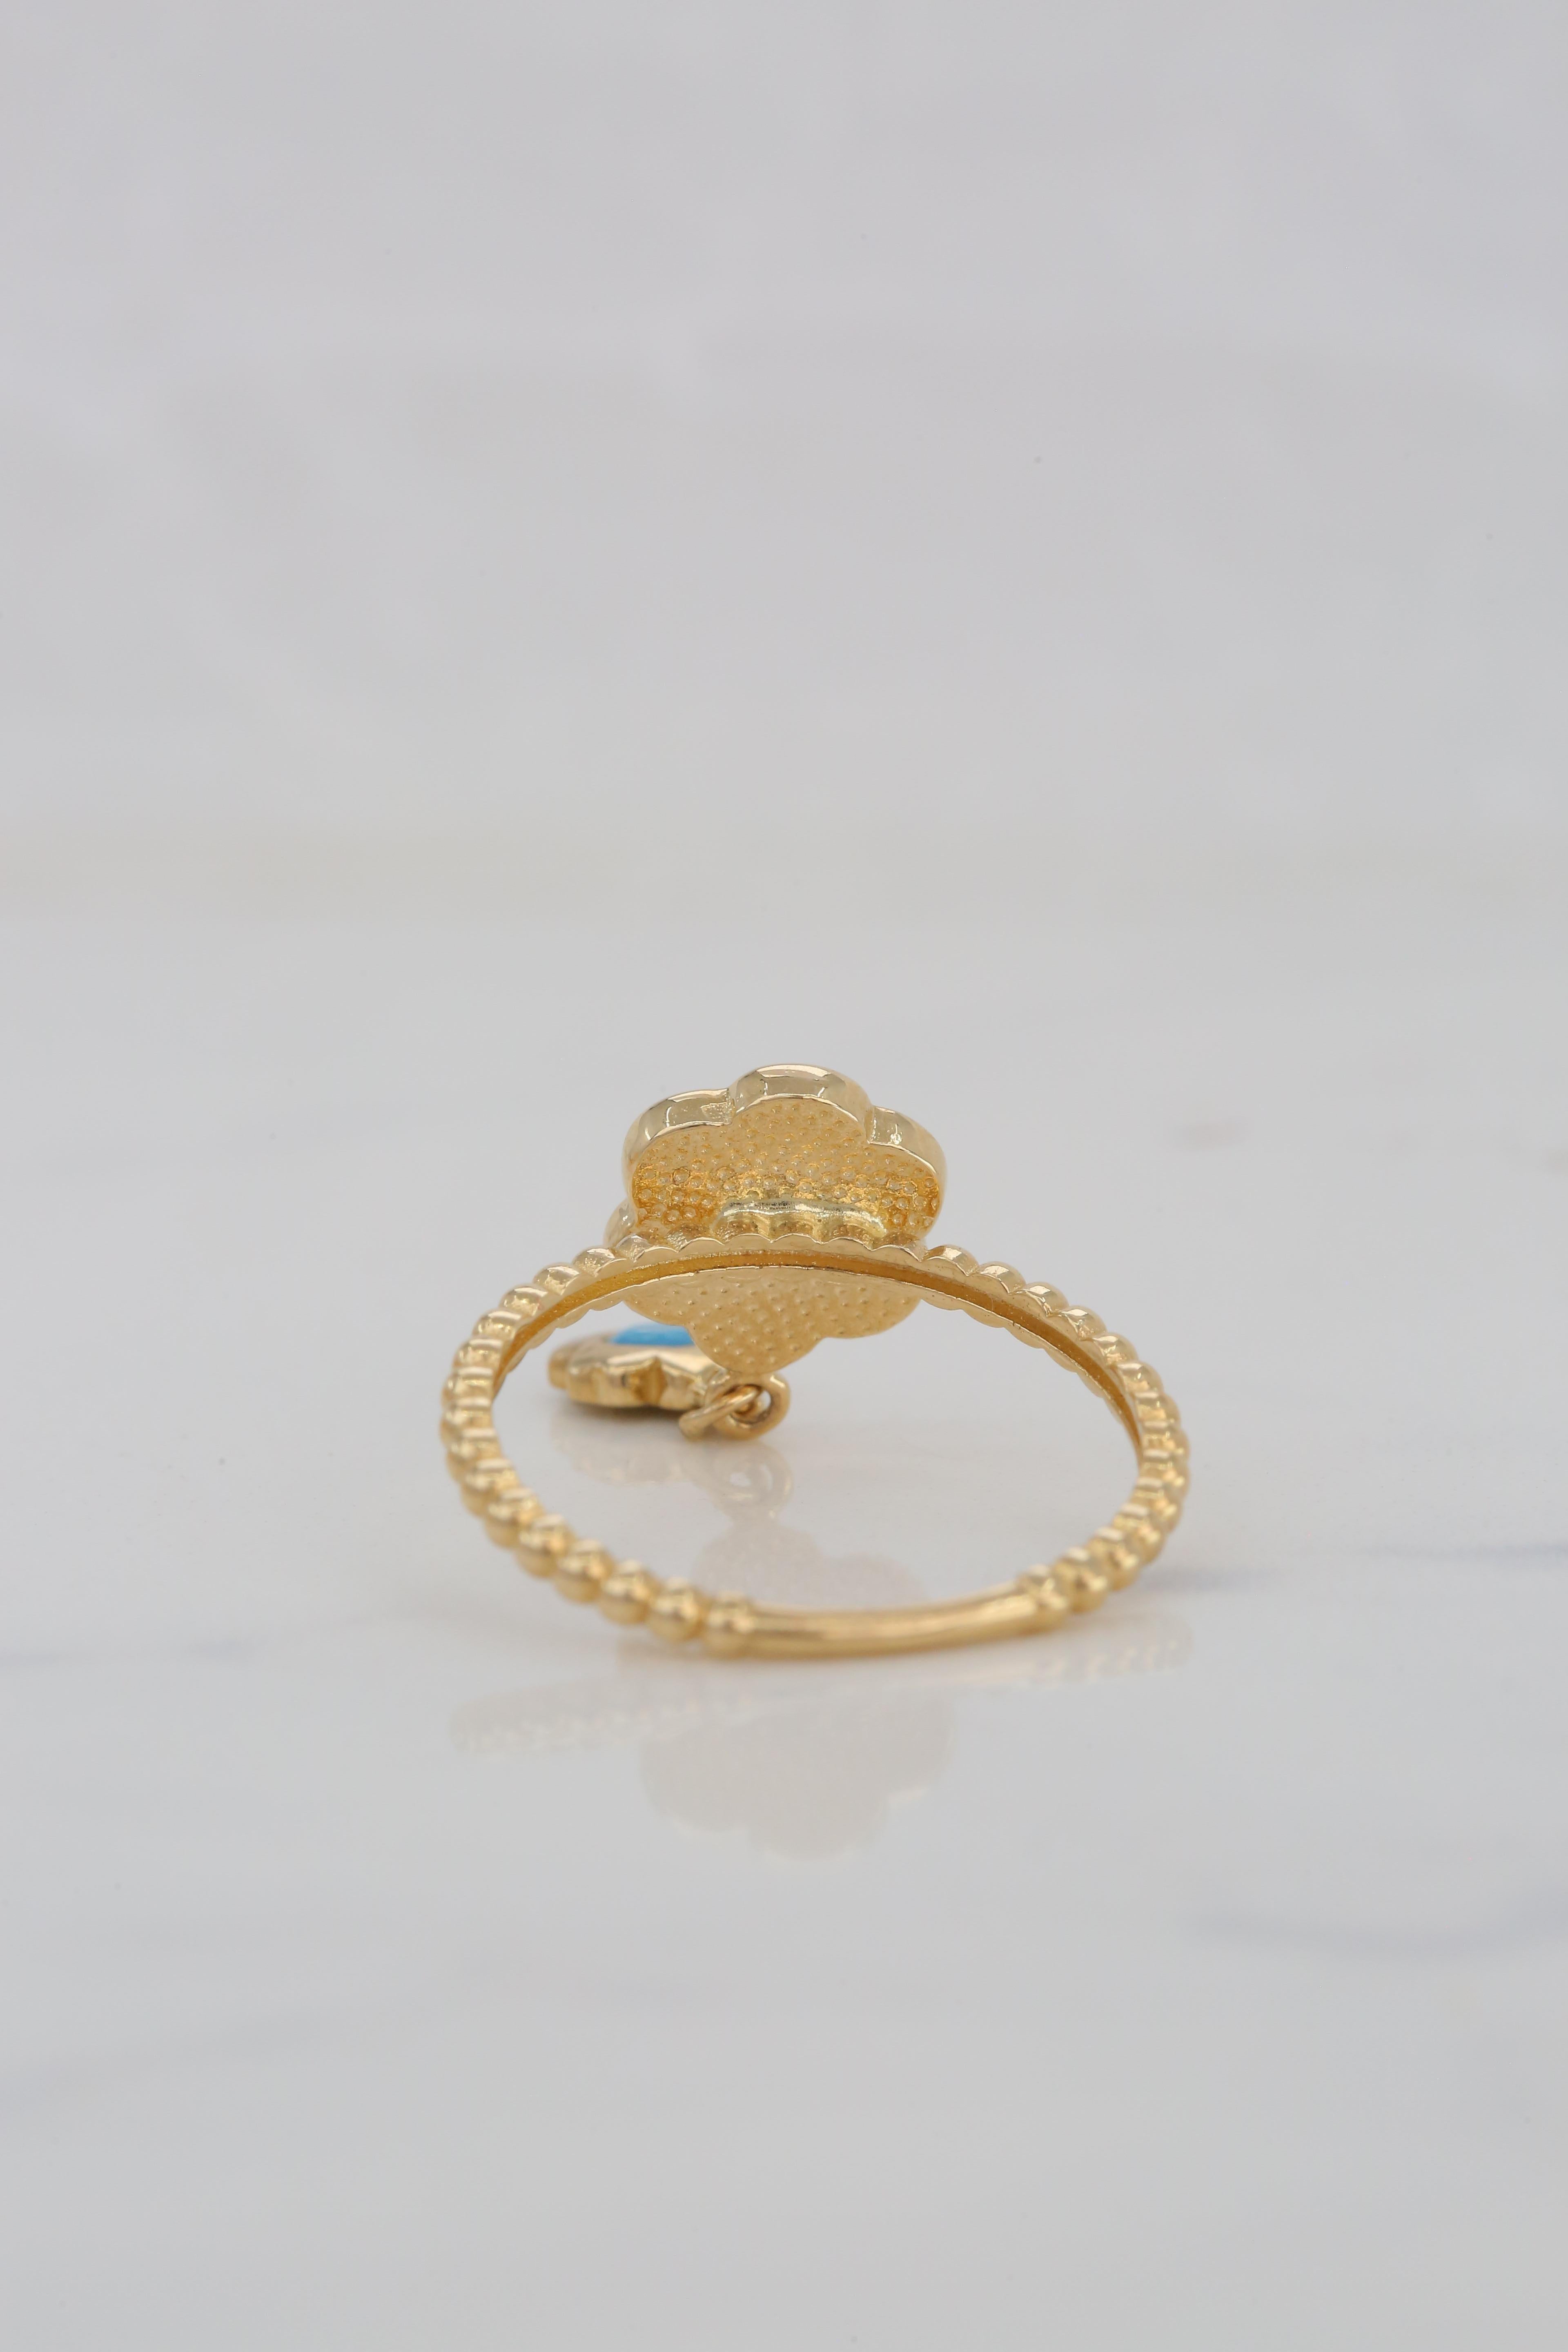 14K Gold Daisy Enamel Ring with Turquoise Pendant 5